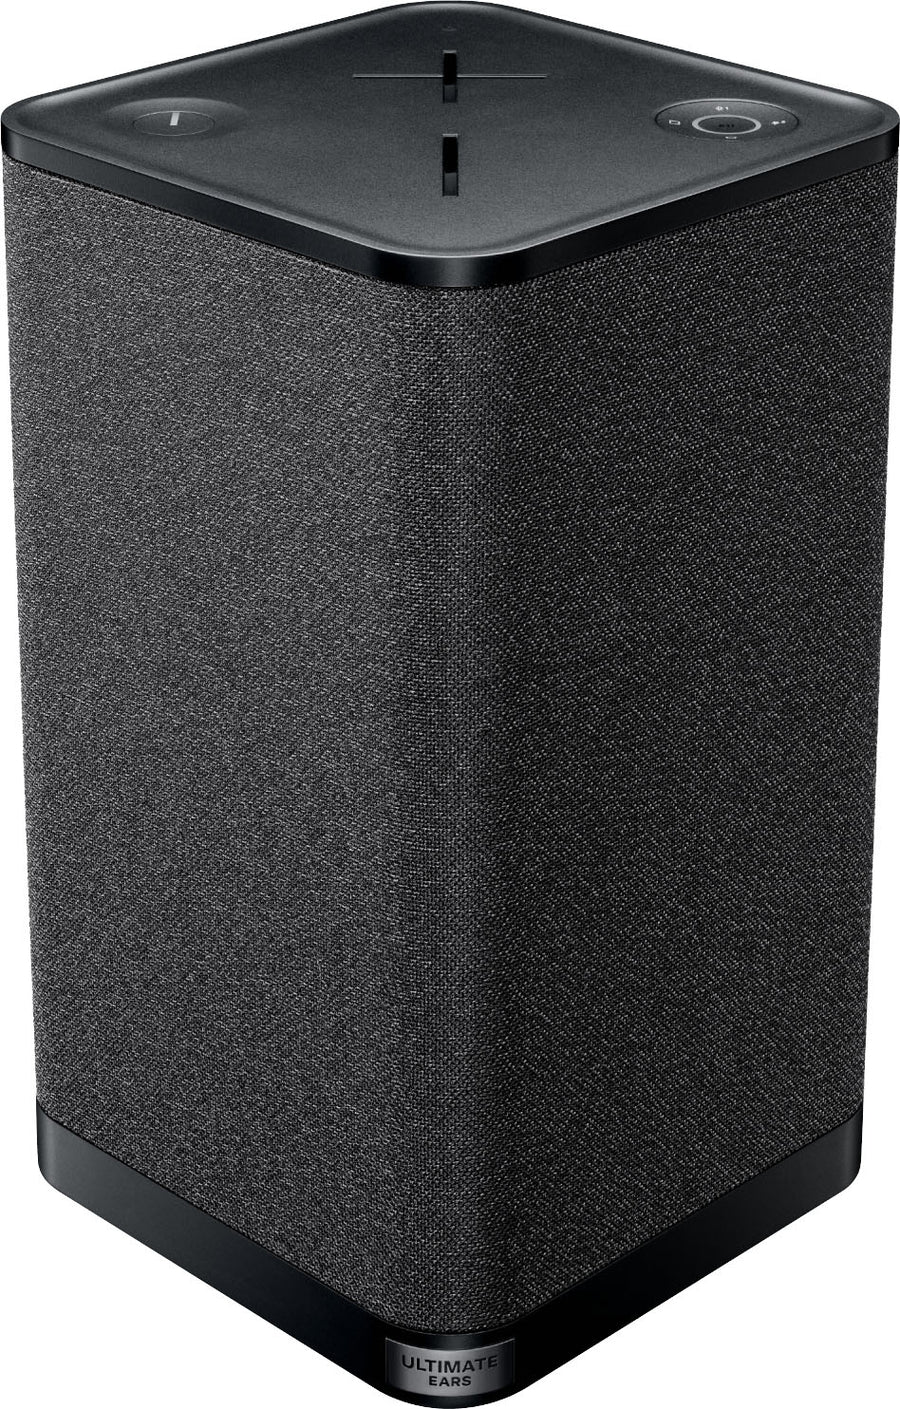 Ultimate Ears - HYPERBOOM Portable Wireless Bluetooth Party Speaker with Waterproof, Dustproof and Floatable design - Black_0